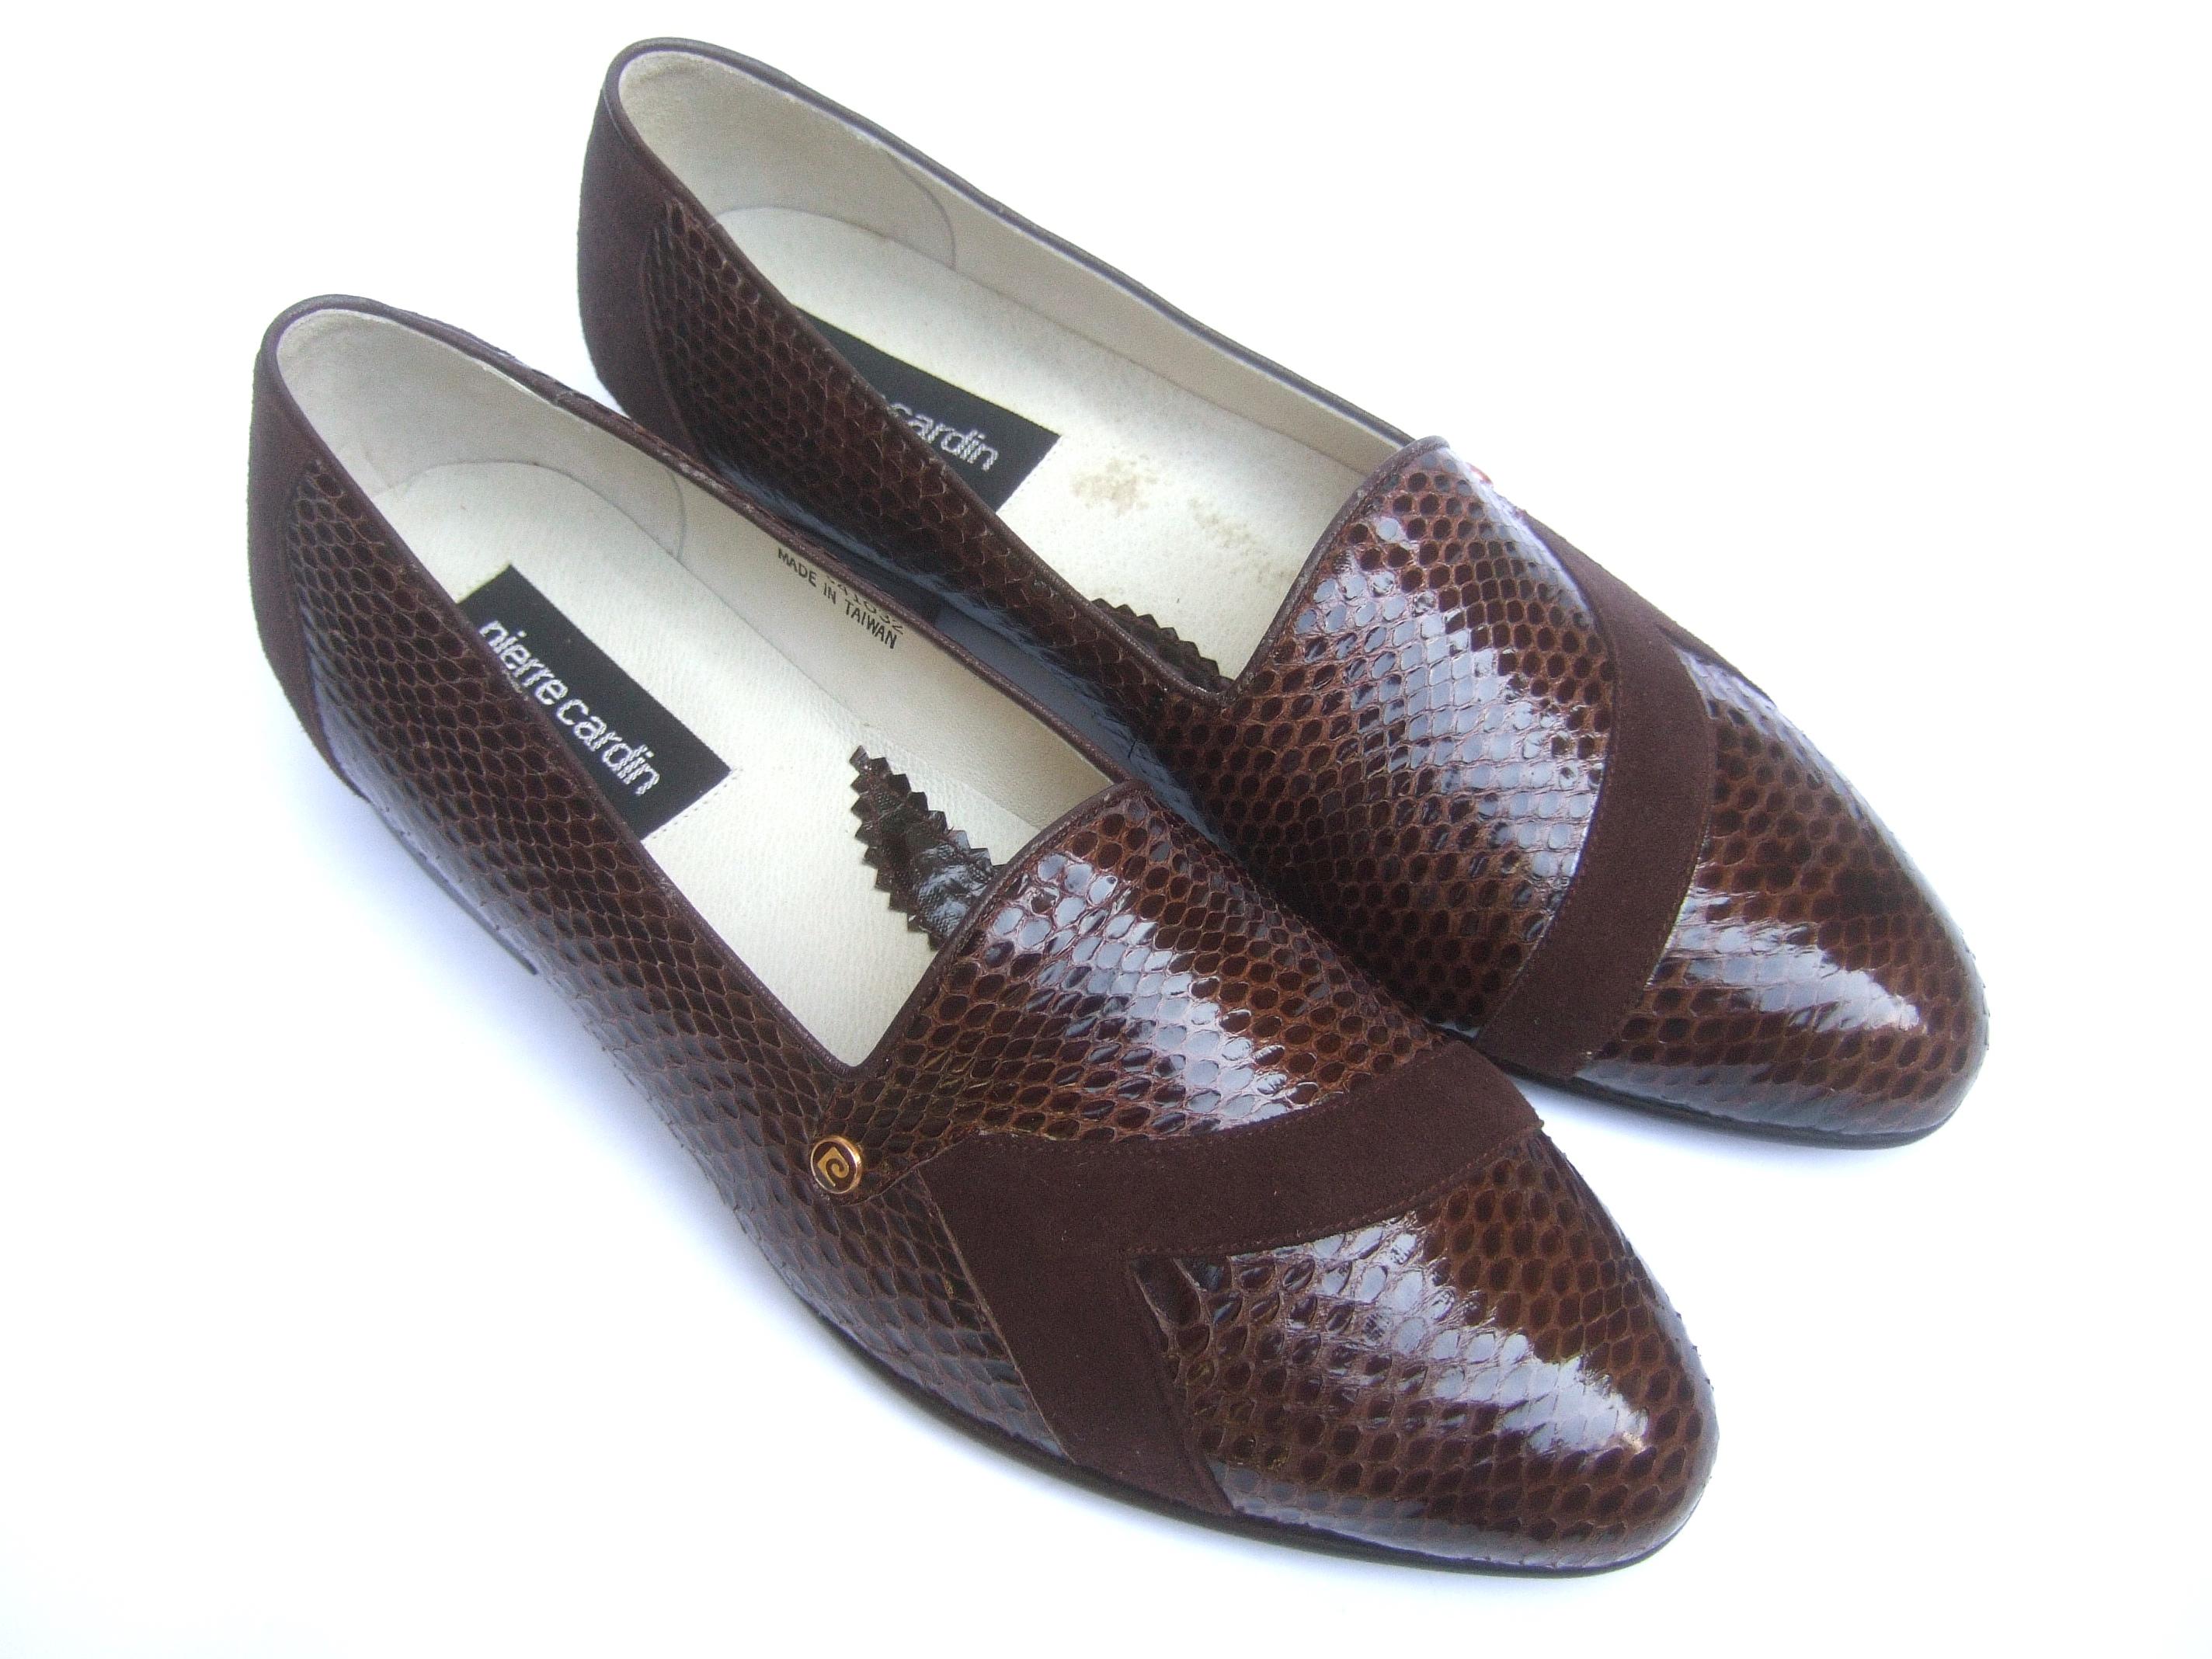 Pierre Cardin Men's Brown Snakeskin Dress Shoes New Vintage US Size 11 c 1970s 2